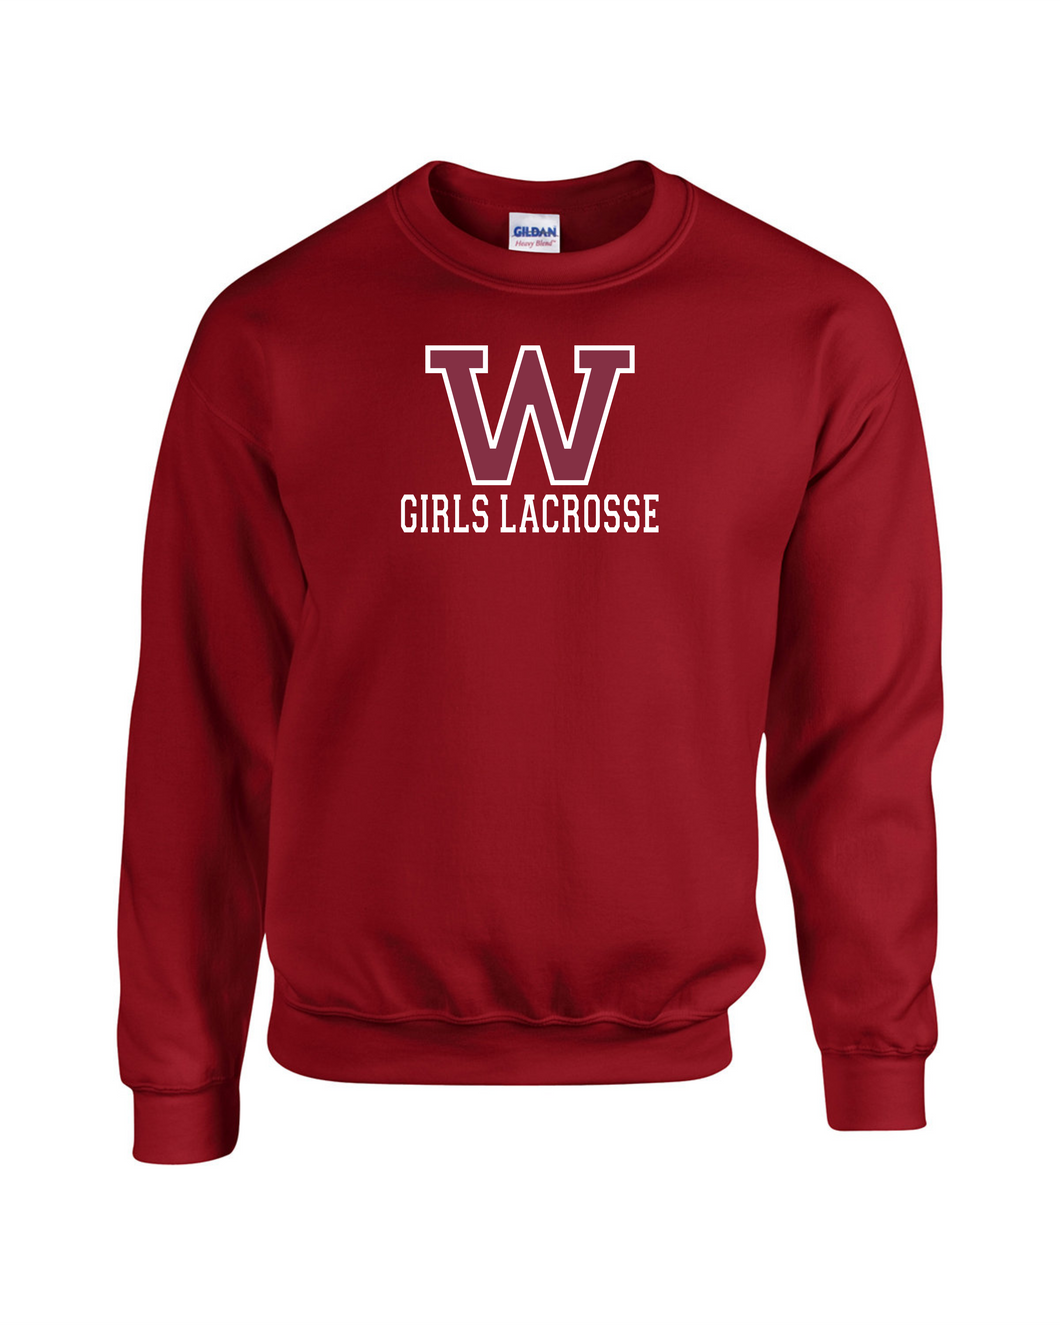 WW-GLAX-304-1 - Gildan Adult 8 oz., 50/50 Fleece Crew - Woodstock Girls Lacrosse Logo